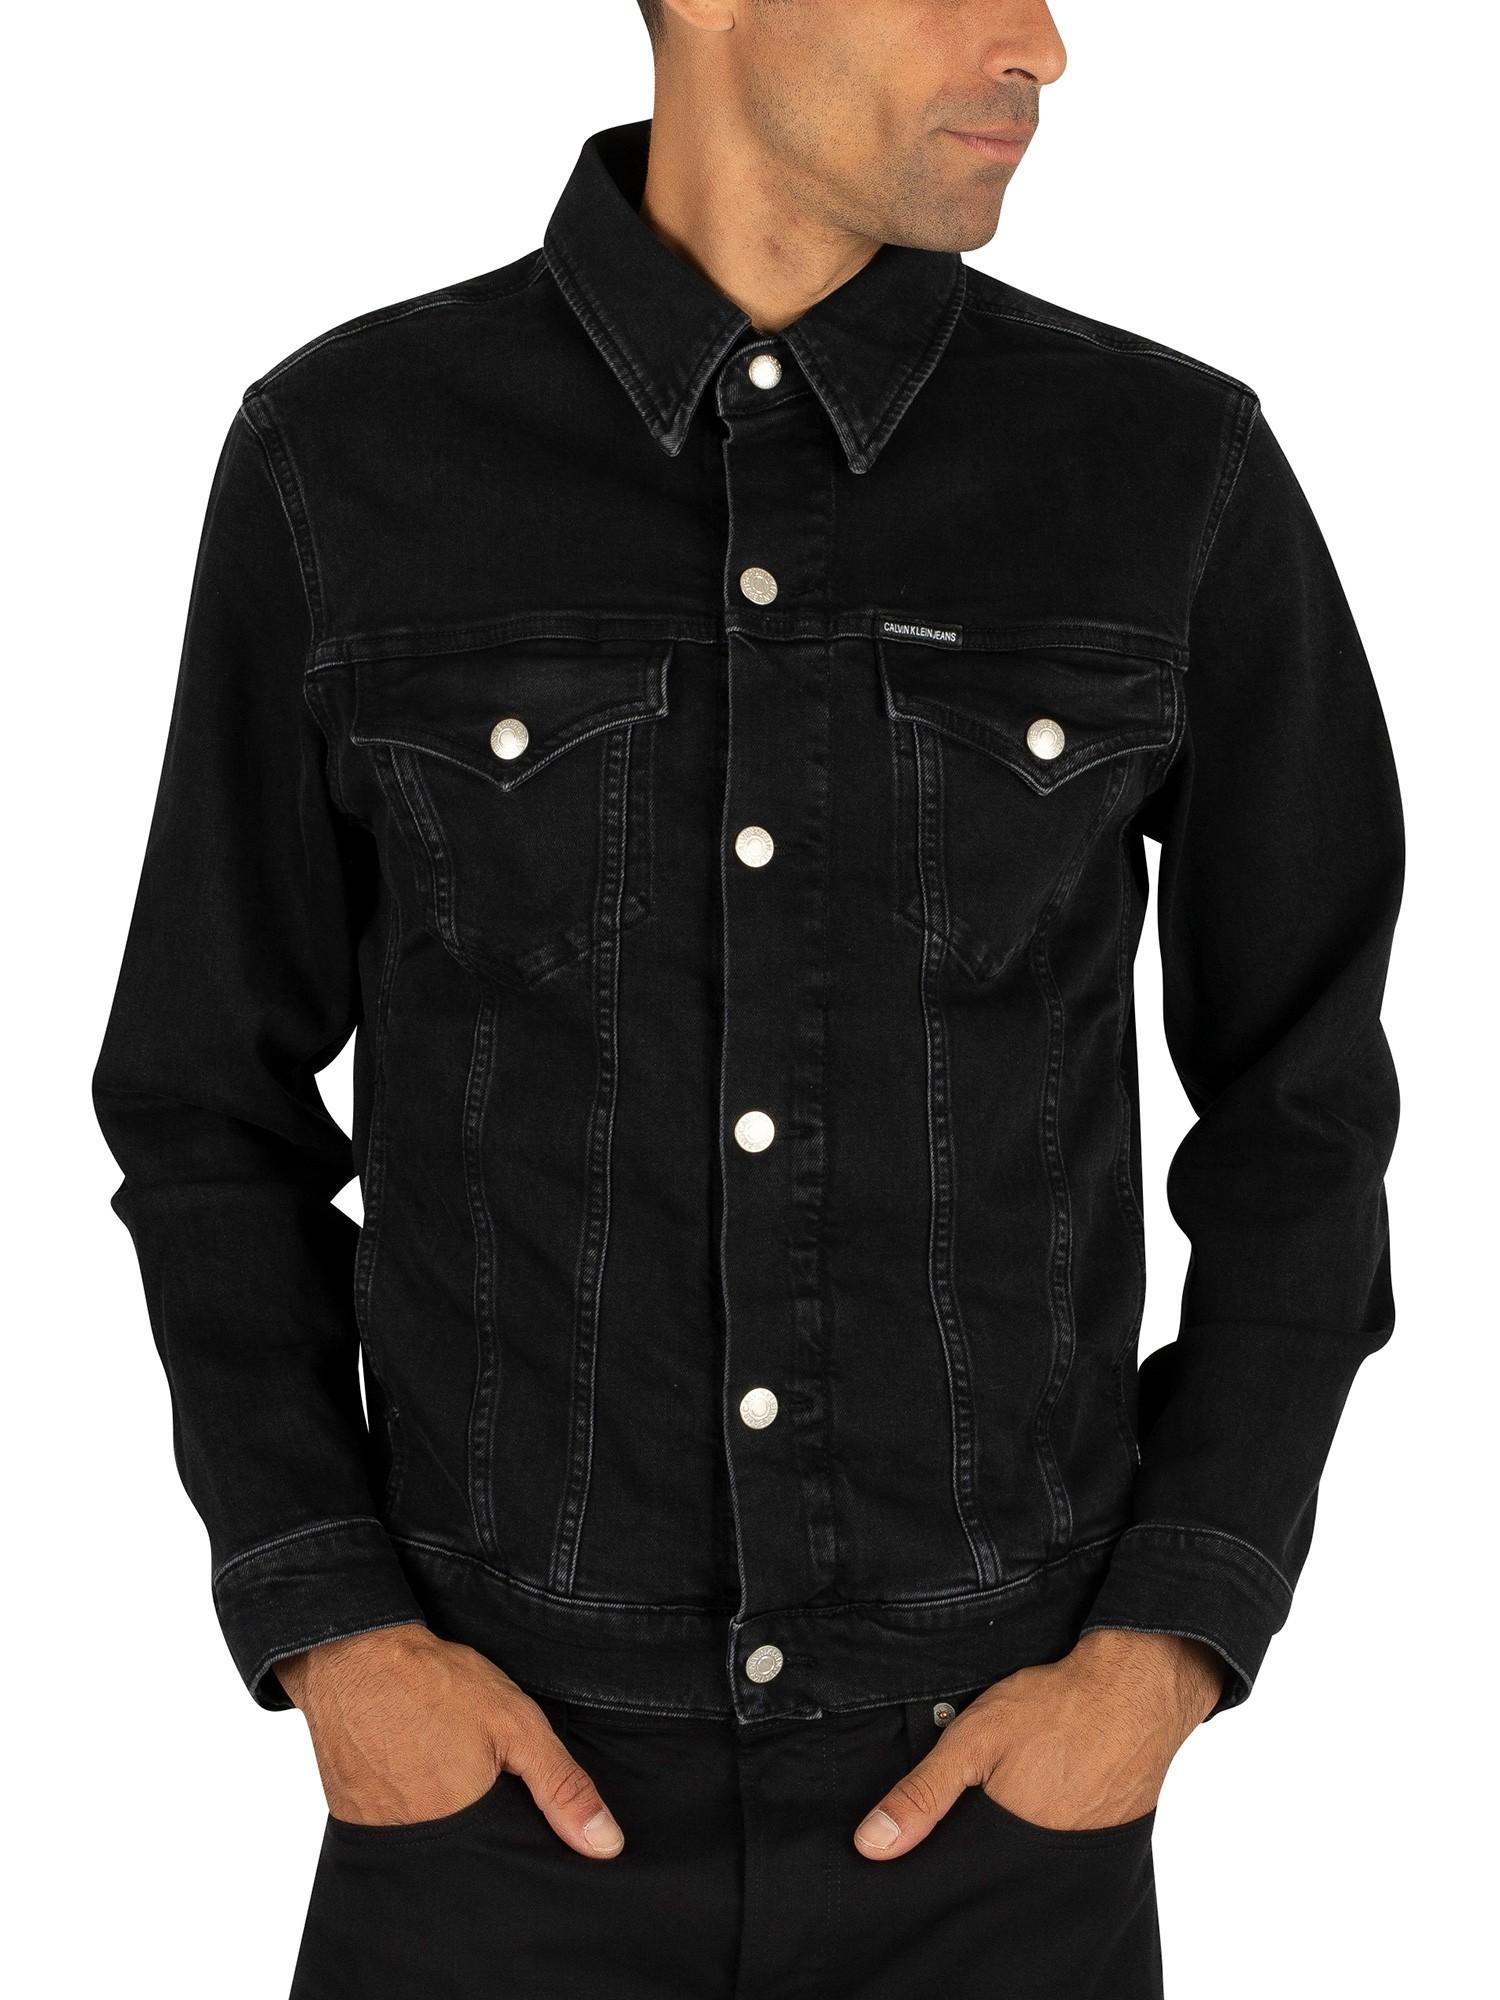 Calvin Klein Foundation Slim Denim Jacket in Black for Men - Lyst